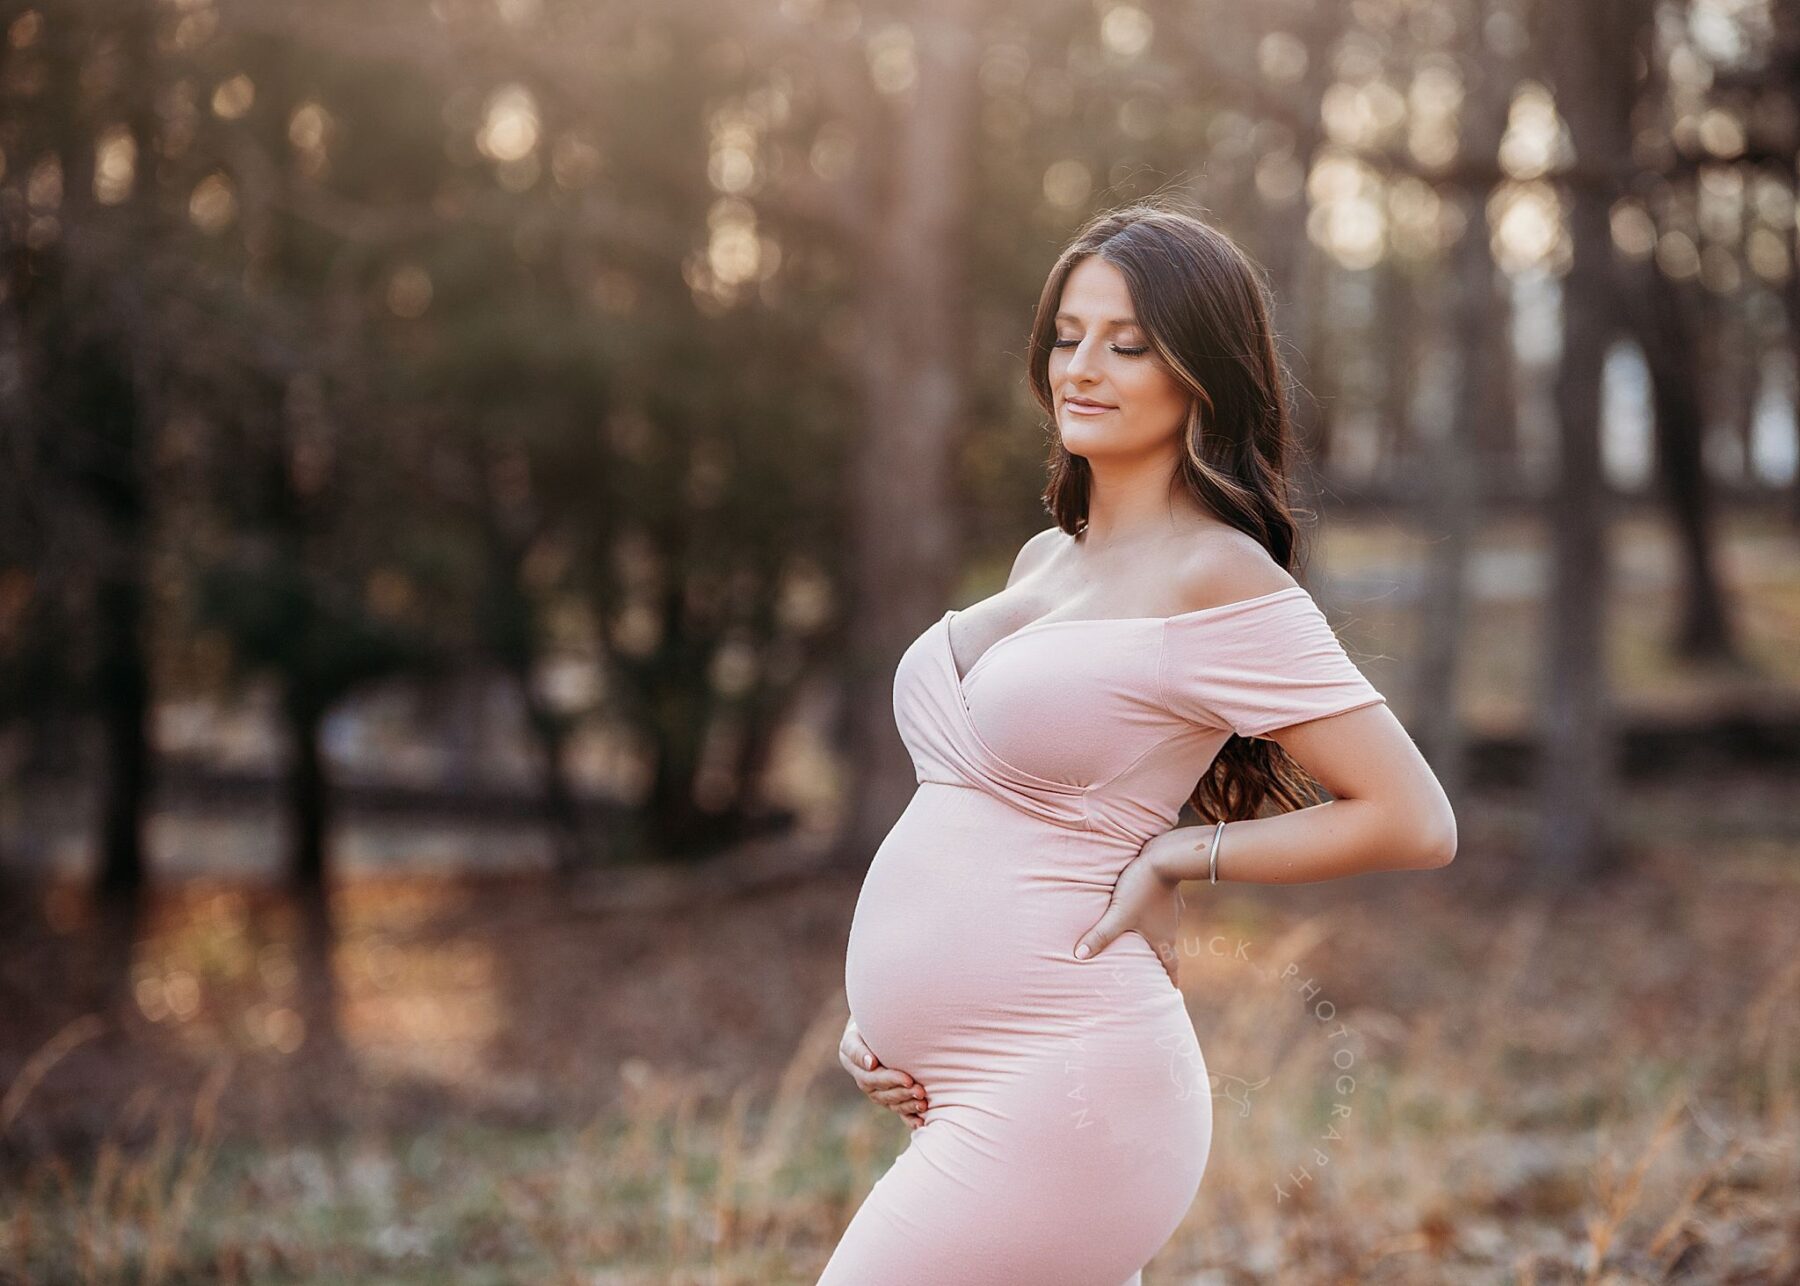 Professional Maternity Photography  Capturing the Beauty of Motherhood